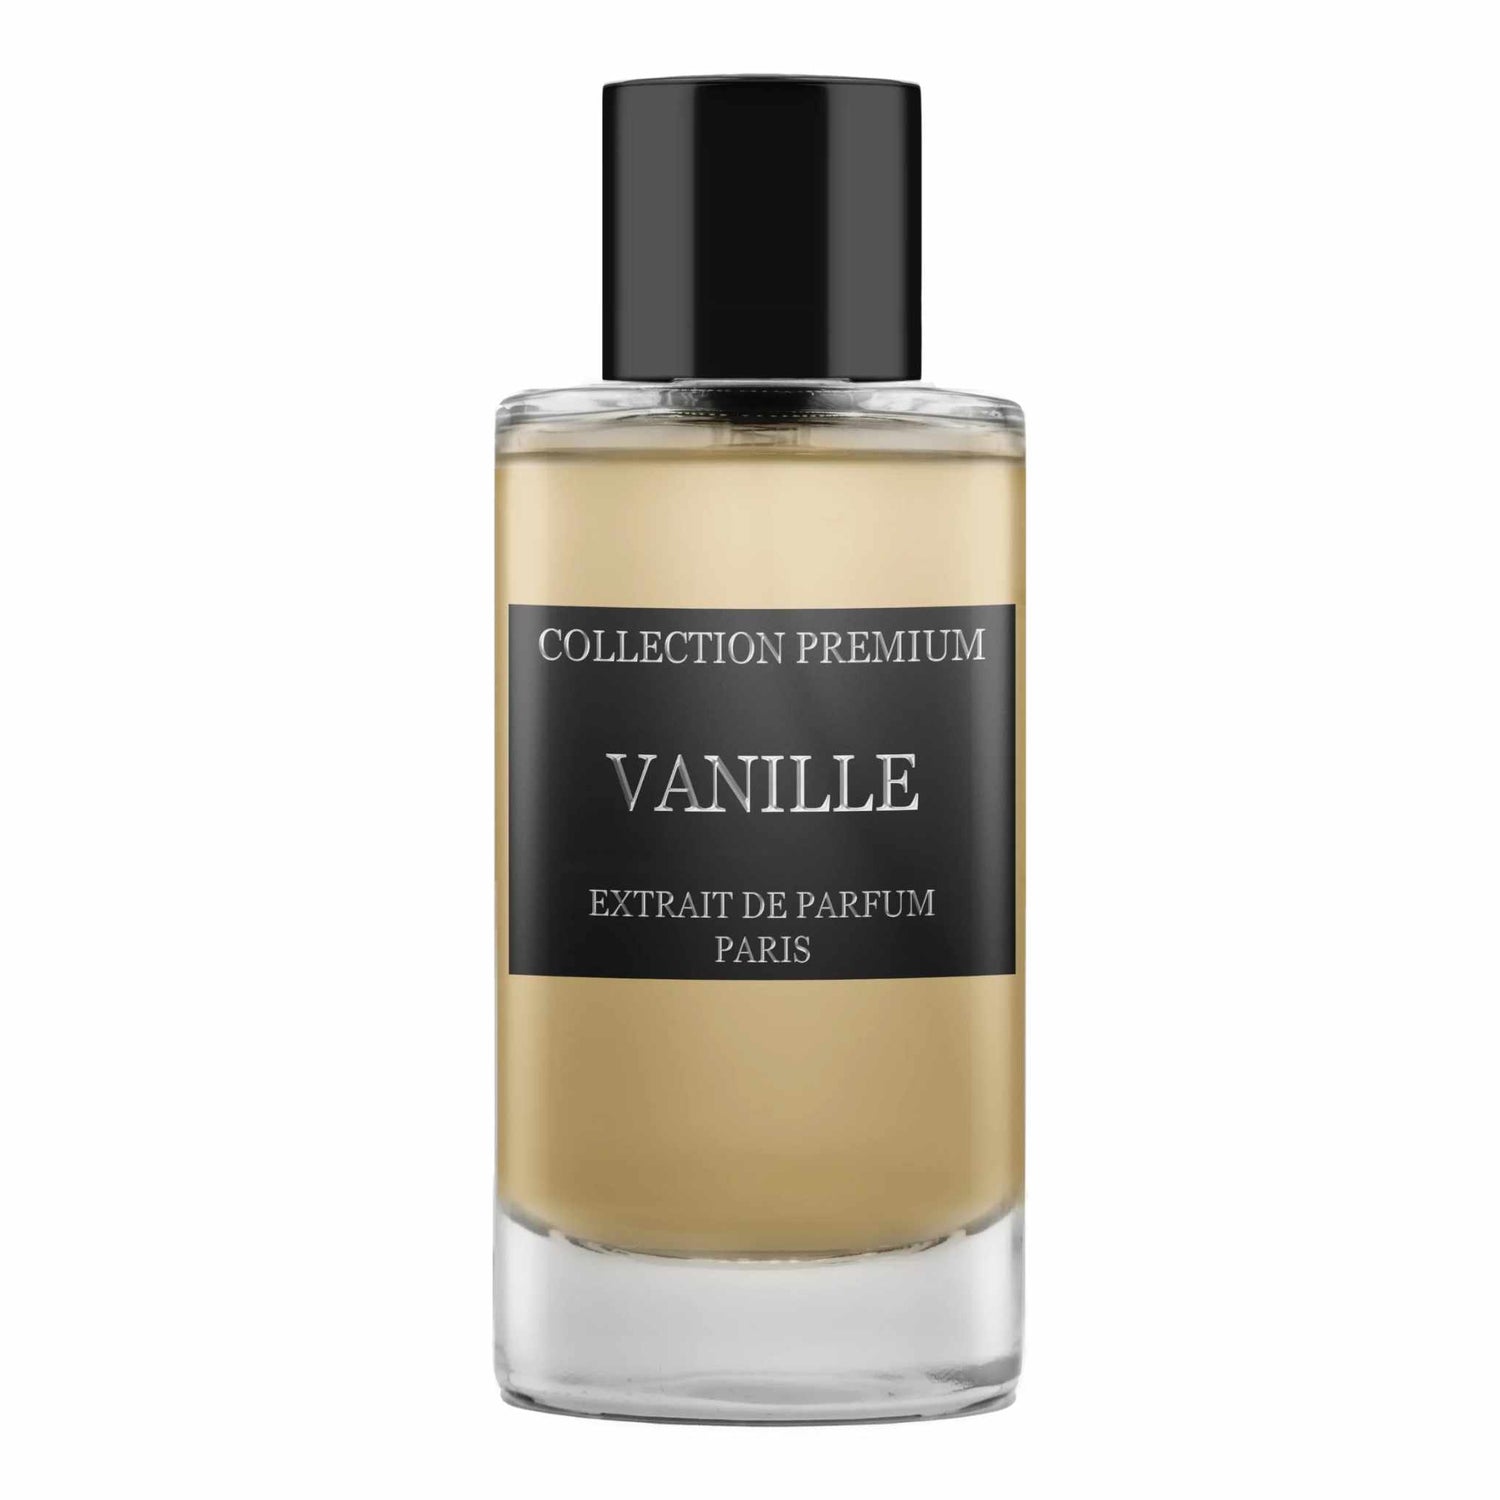 Collection Premium Vanille Extrait de Parfum 50 ml